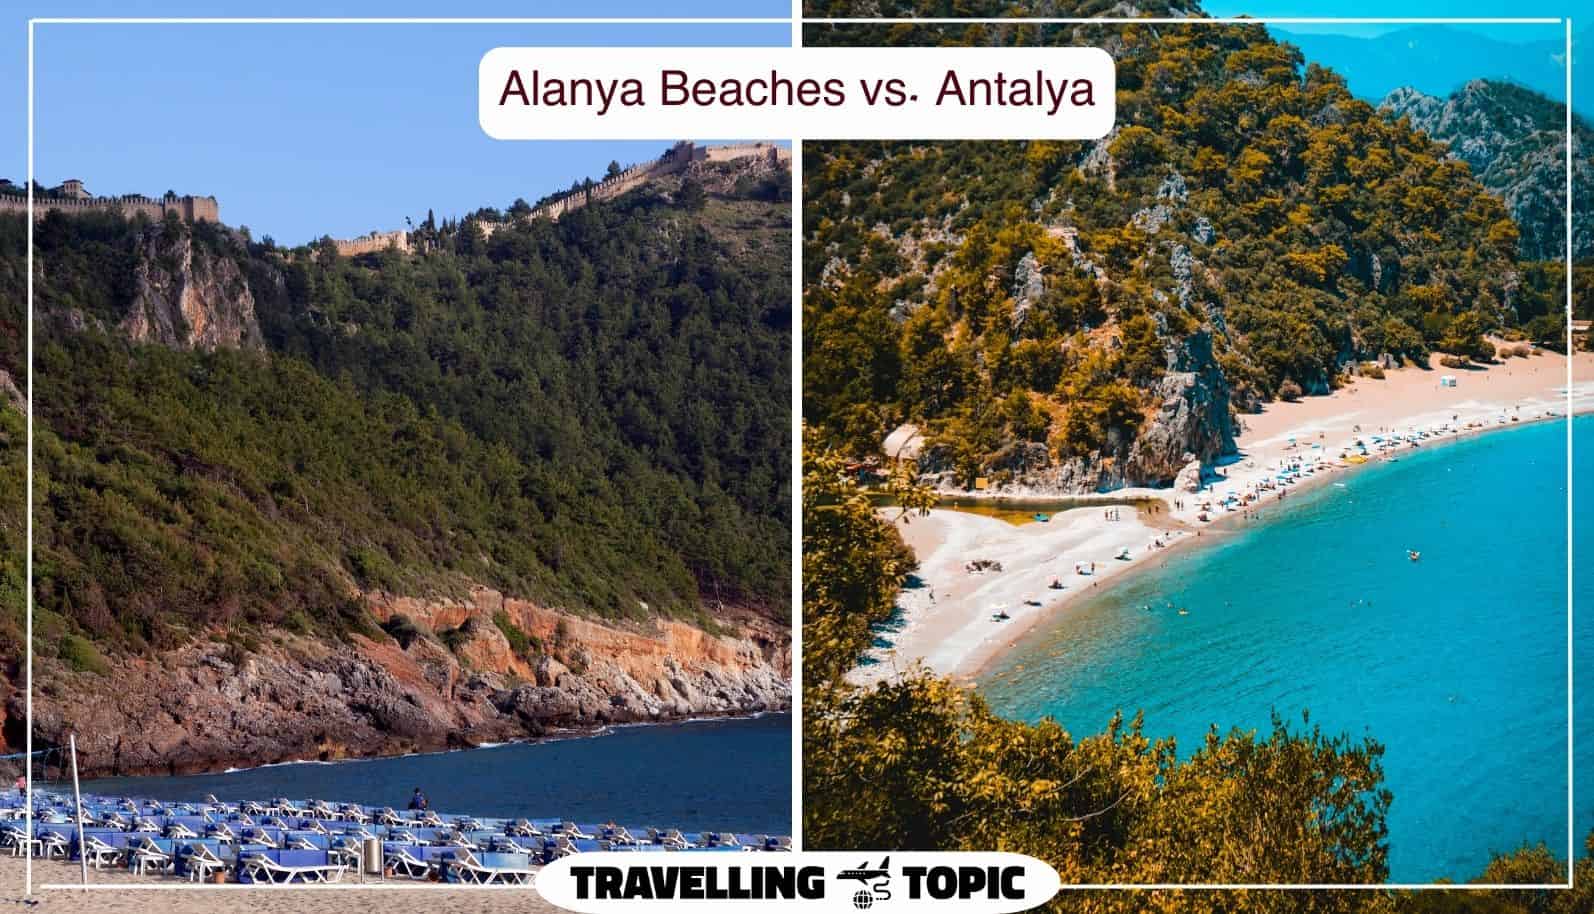 Alanya Beaches vs. Antalya